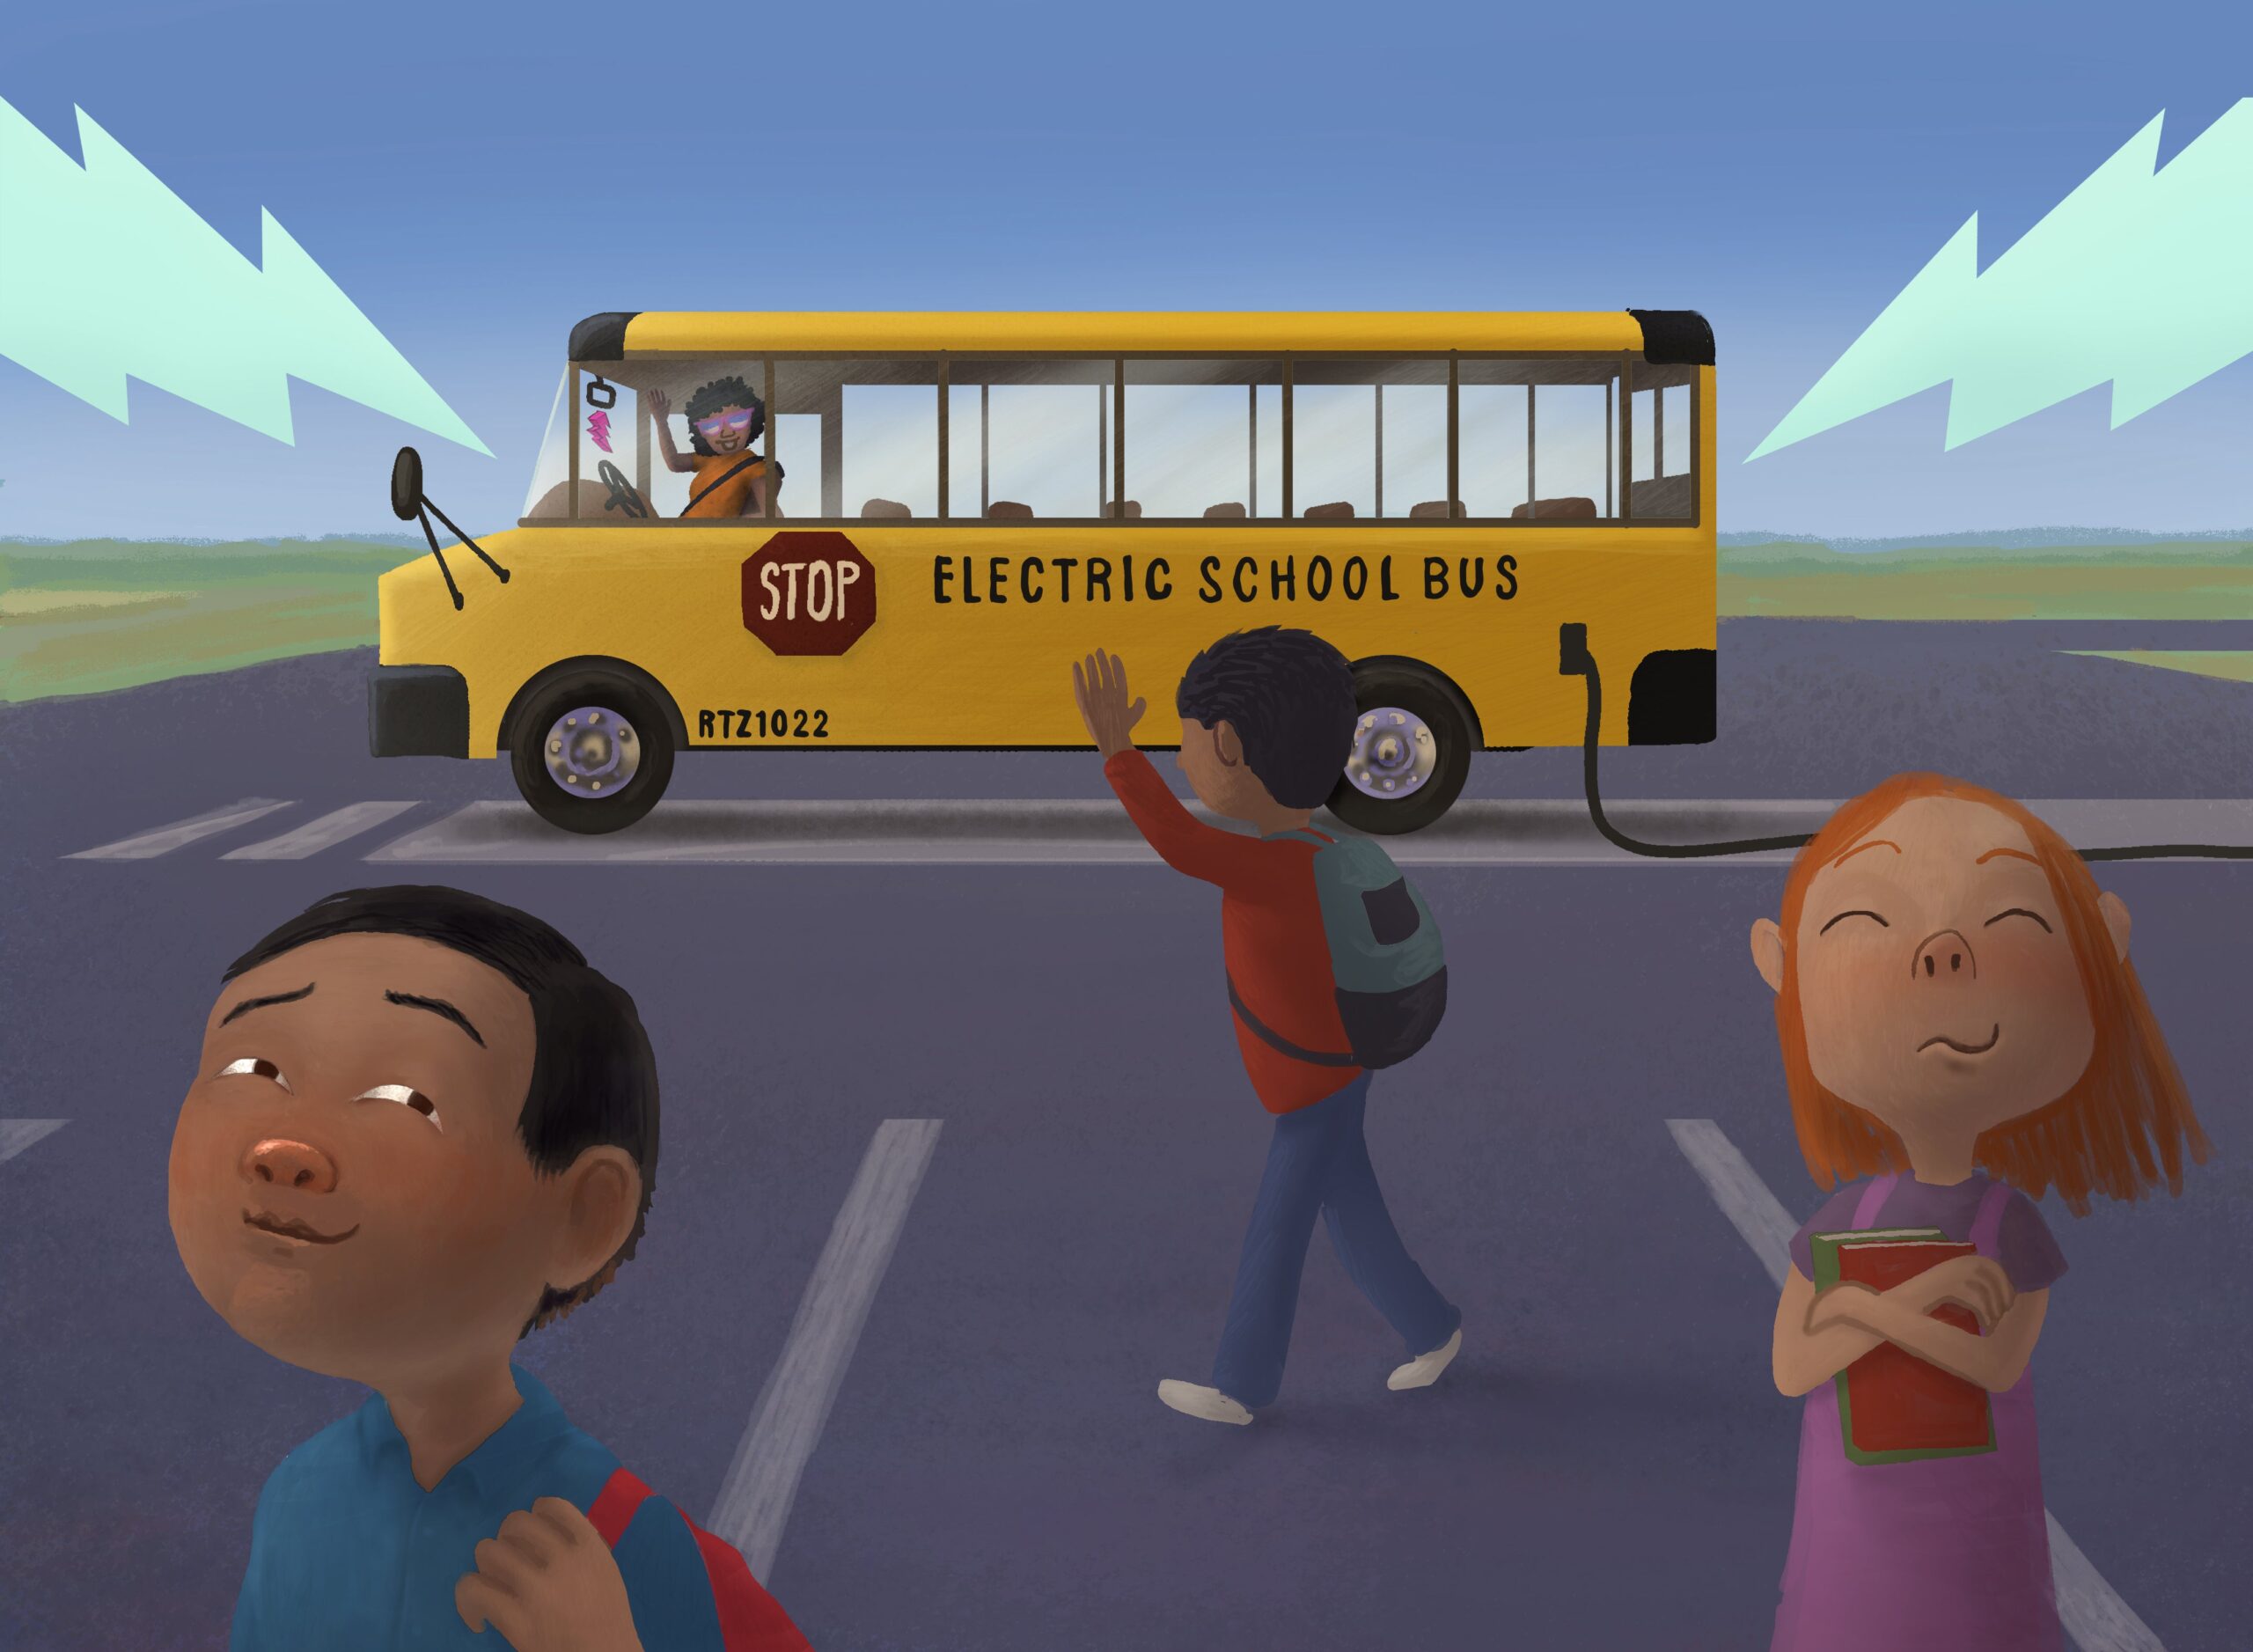 Illustration of children joyfully waving to an electric school bus.